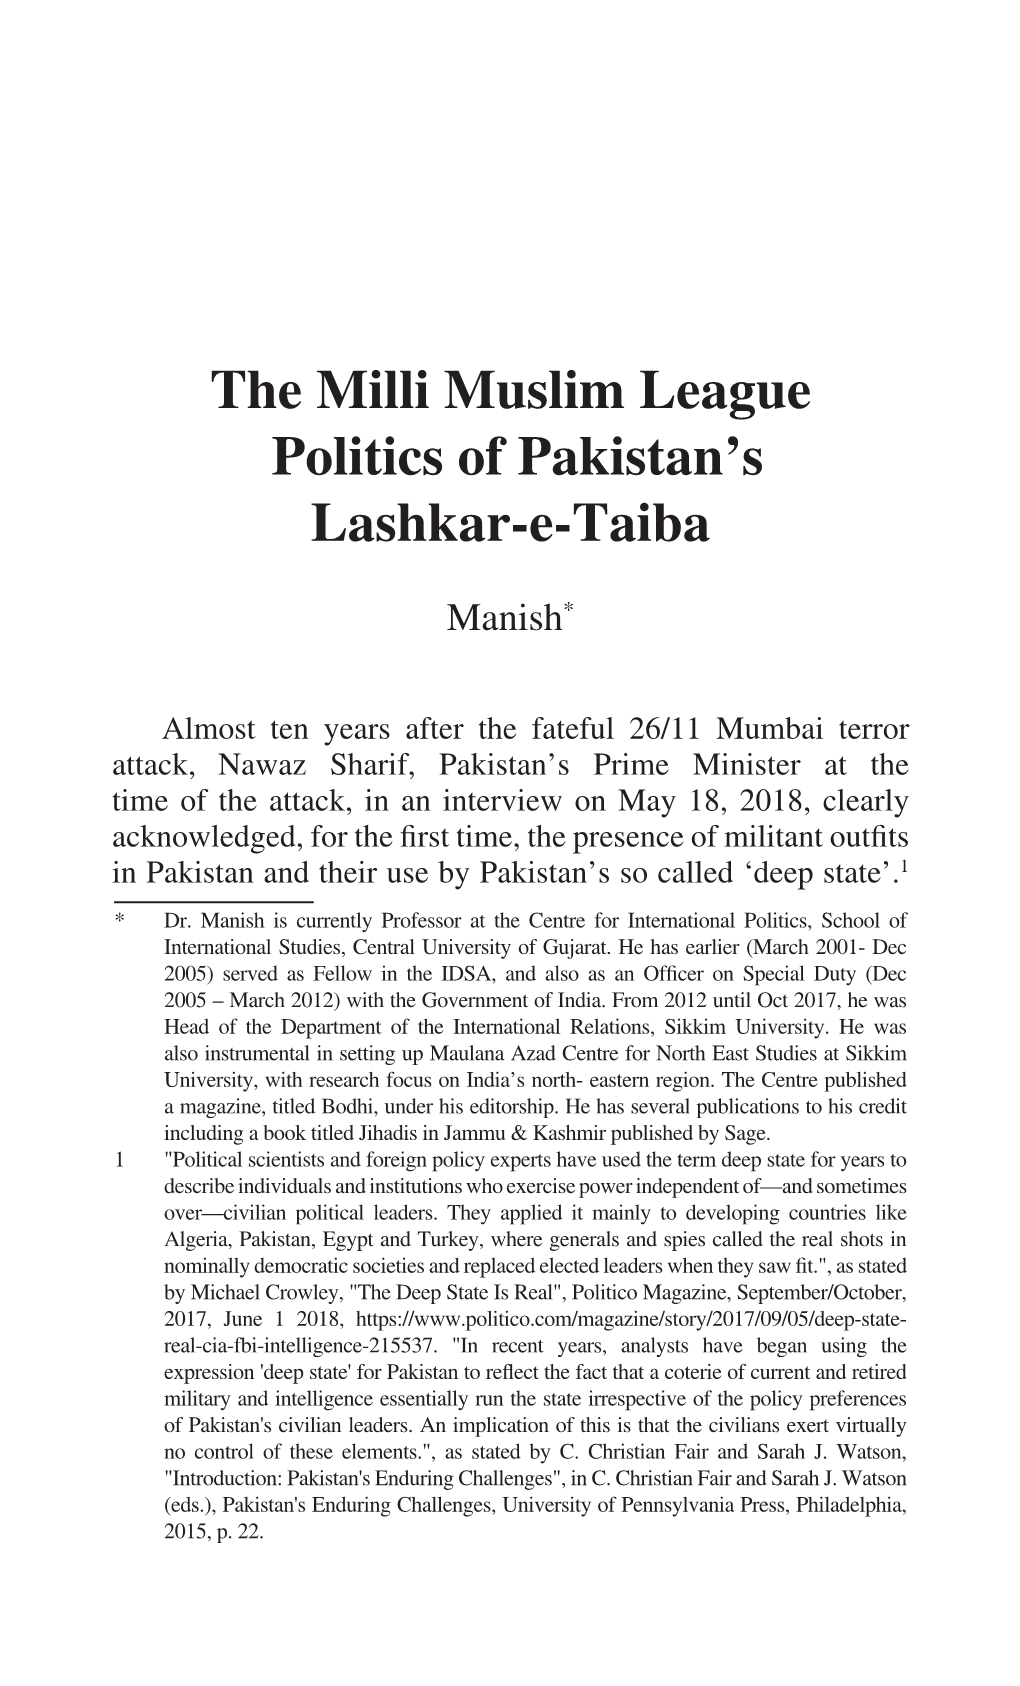 The Milli Muslim League Politics of Pakistan's Lashkar-E-Taiba